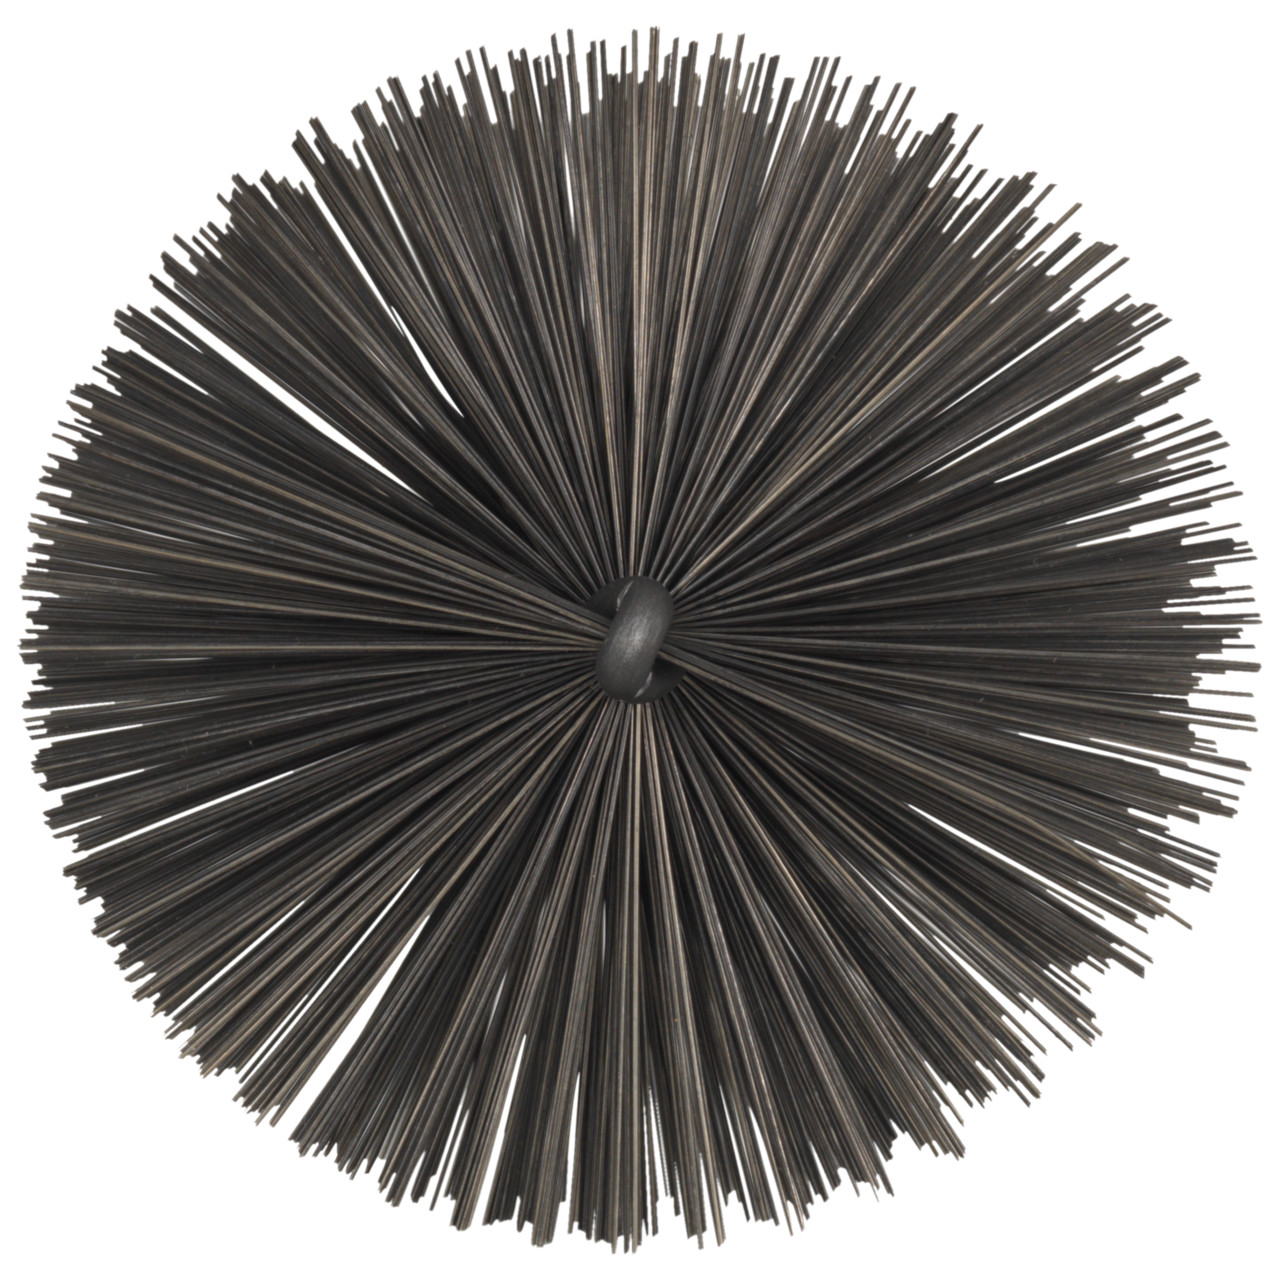 Tyrolit Cepillo para tubos con rosca exterior DxGE-I 25xW1/2-150 Para acero, forma: 18ROGDG - (cepillo para tubos), Art. 34203601